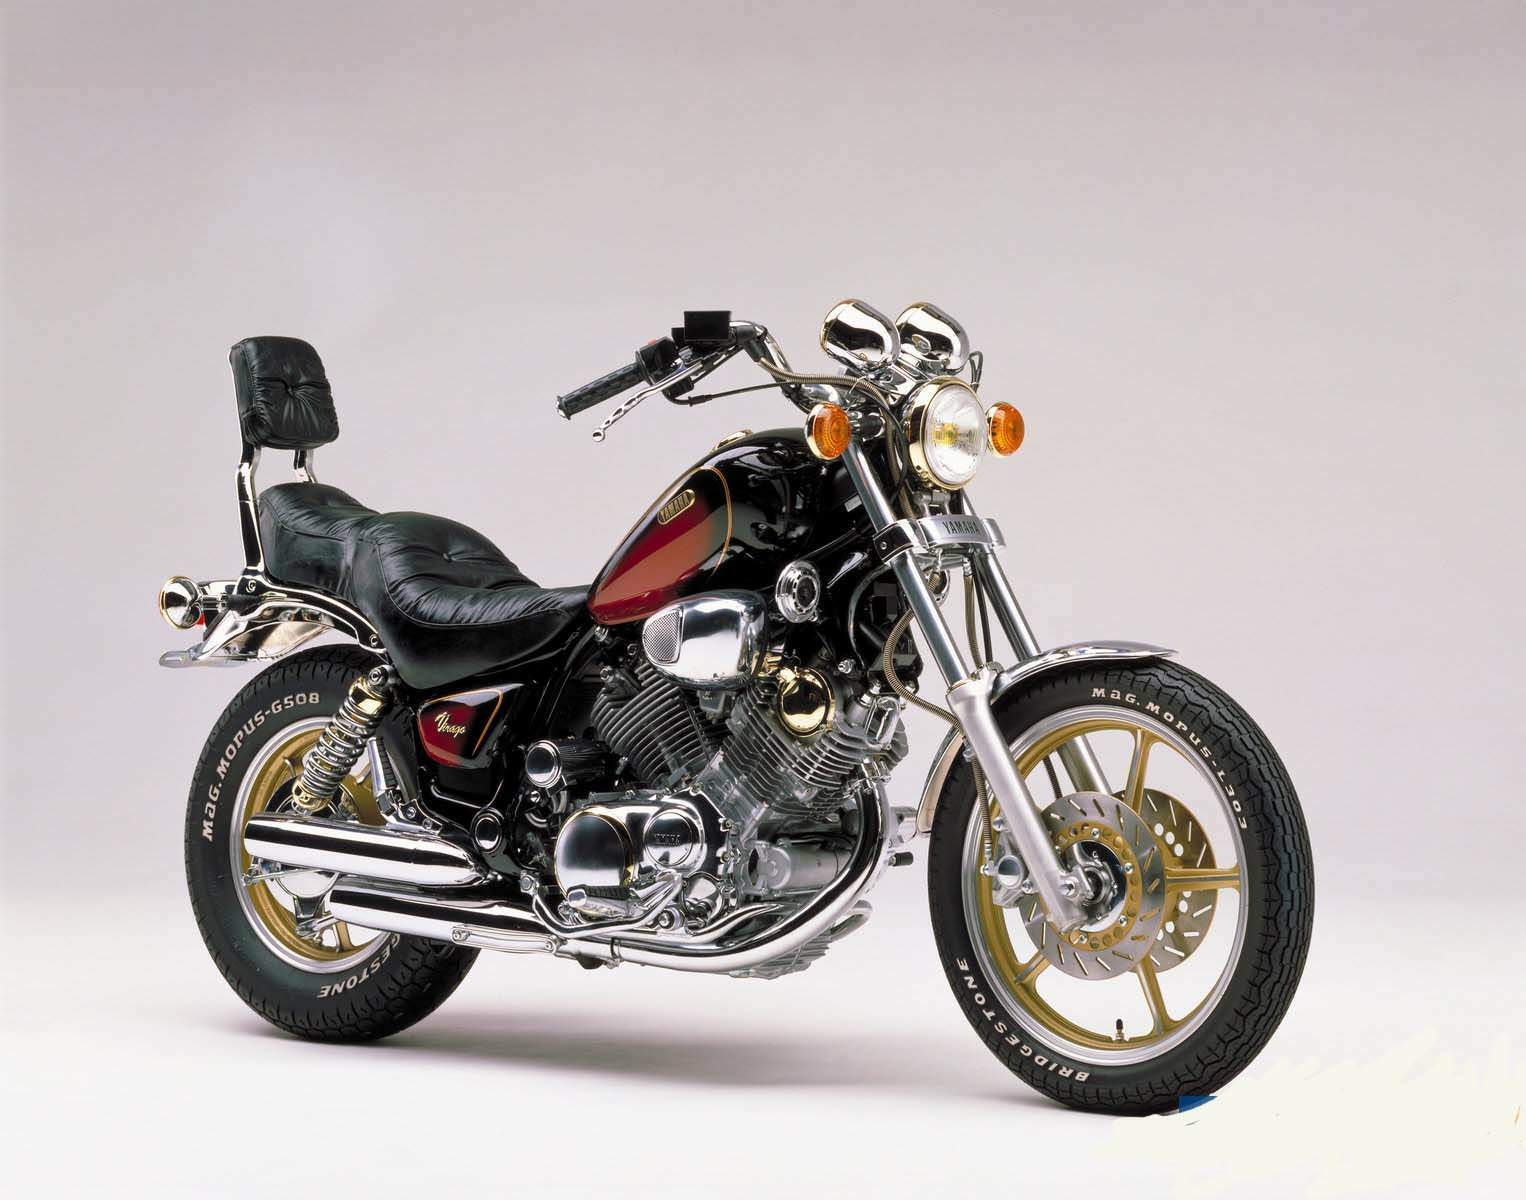 https://www.motorcyclespecs.co.za/Gallery%20%20A/Yamaha%20XV1000%2084.jpg